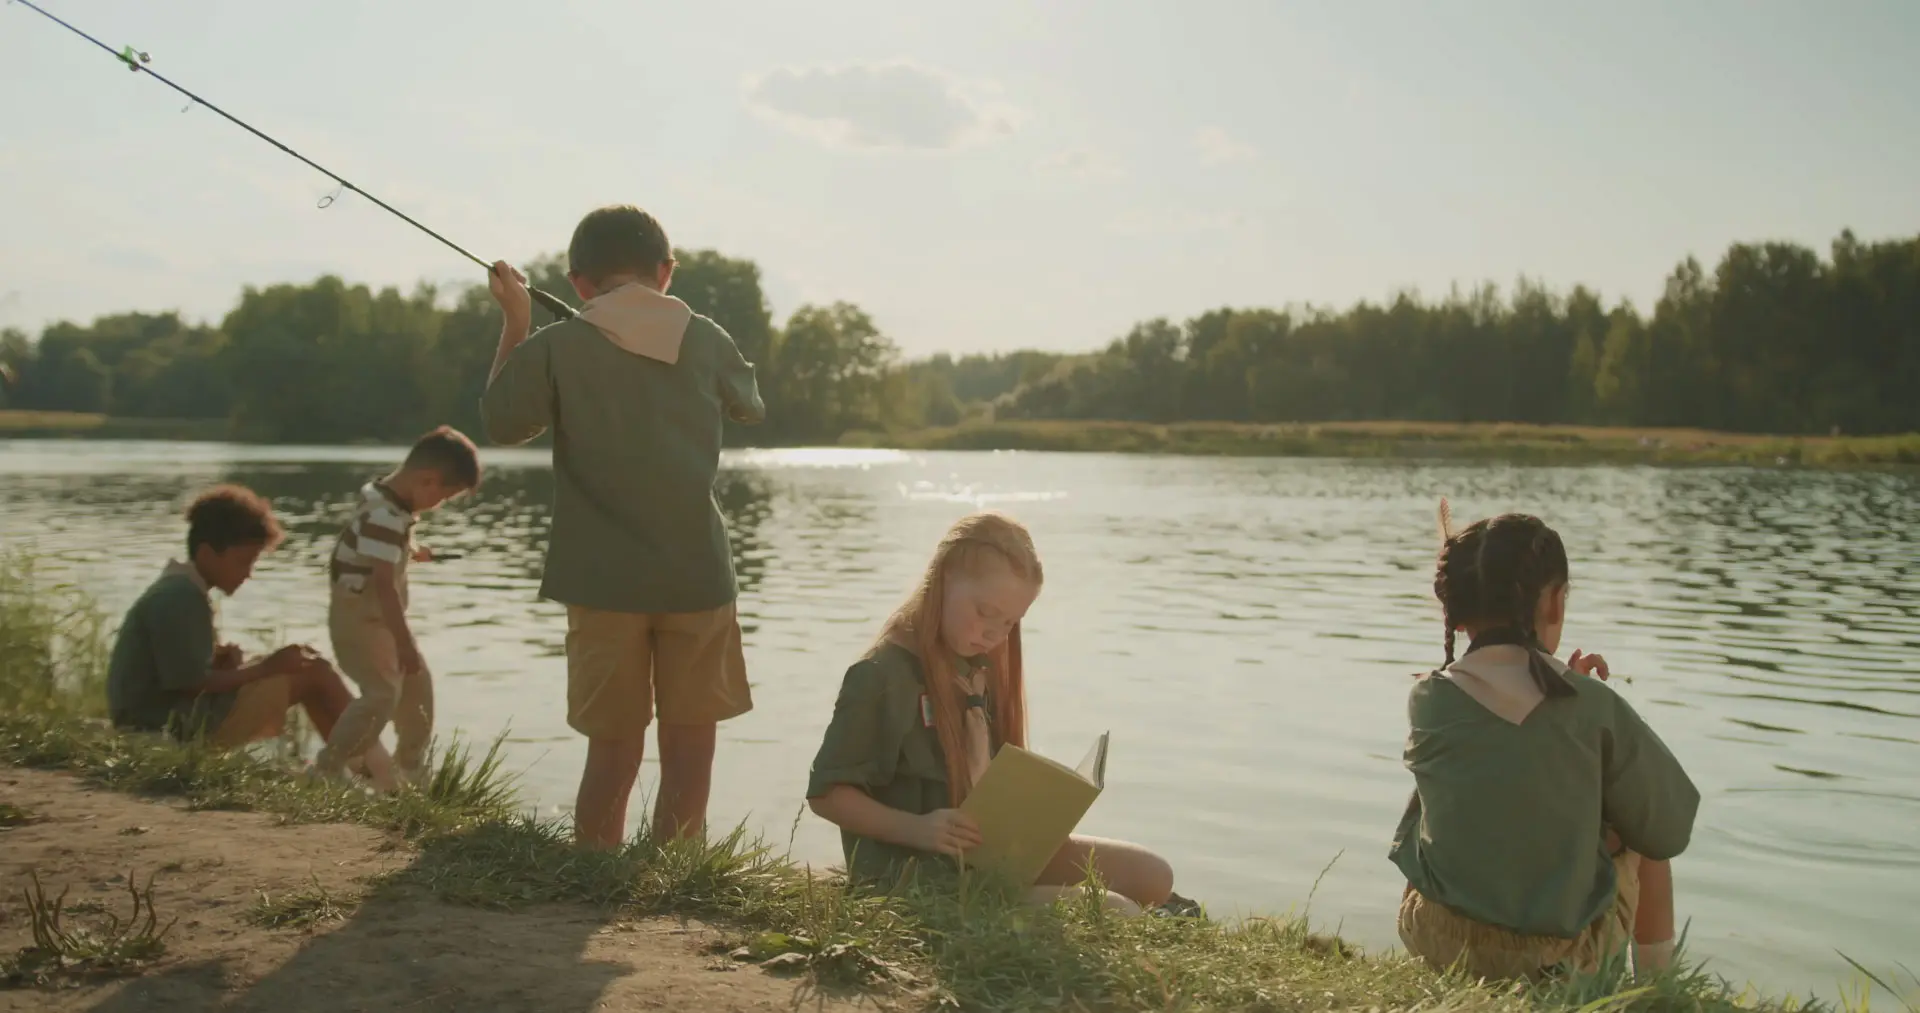 Camping kids by a lake